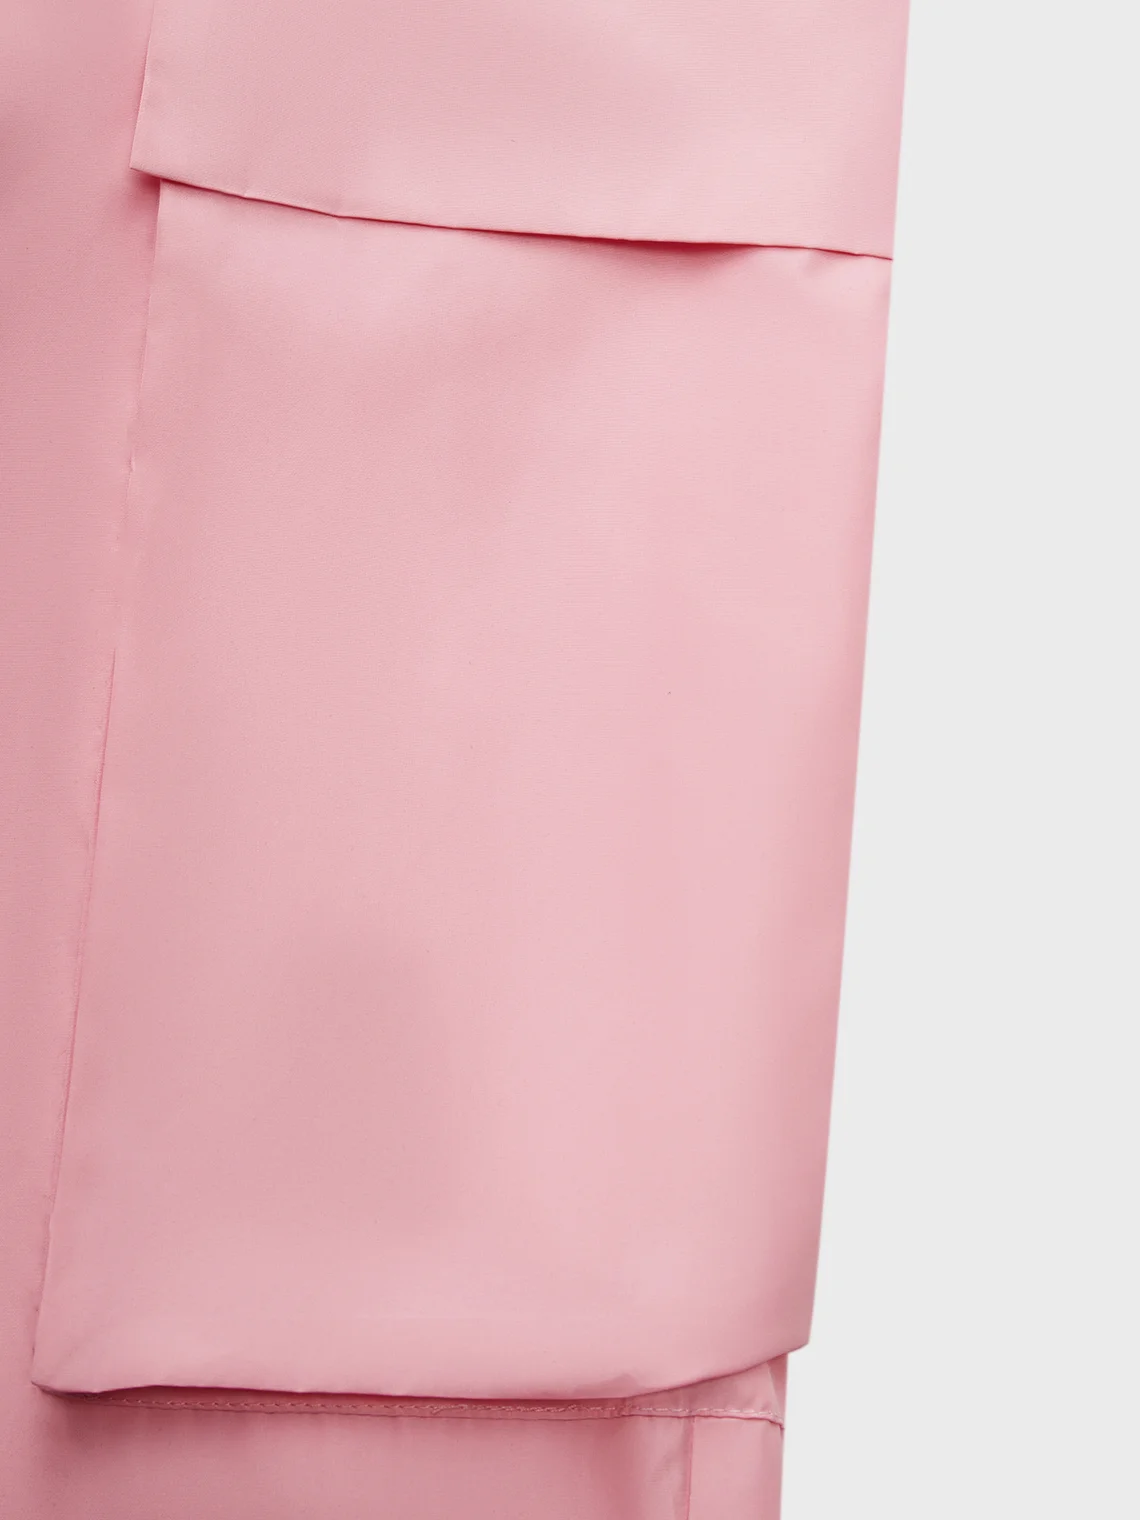 【Final Sale】Street Pink Pockets Belt Bottom Pants